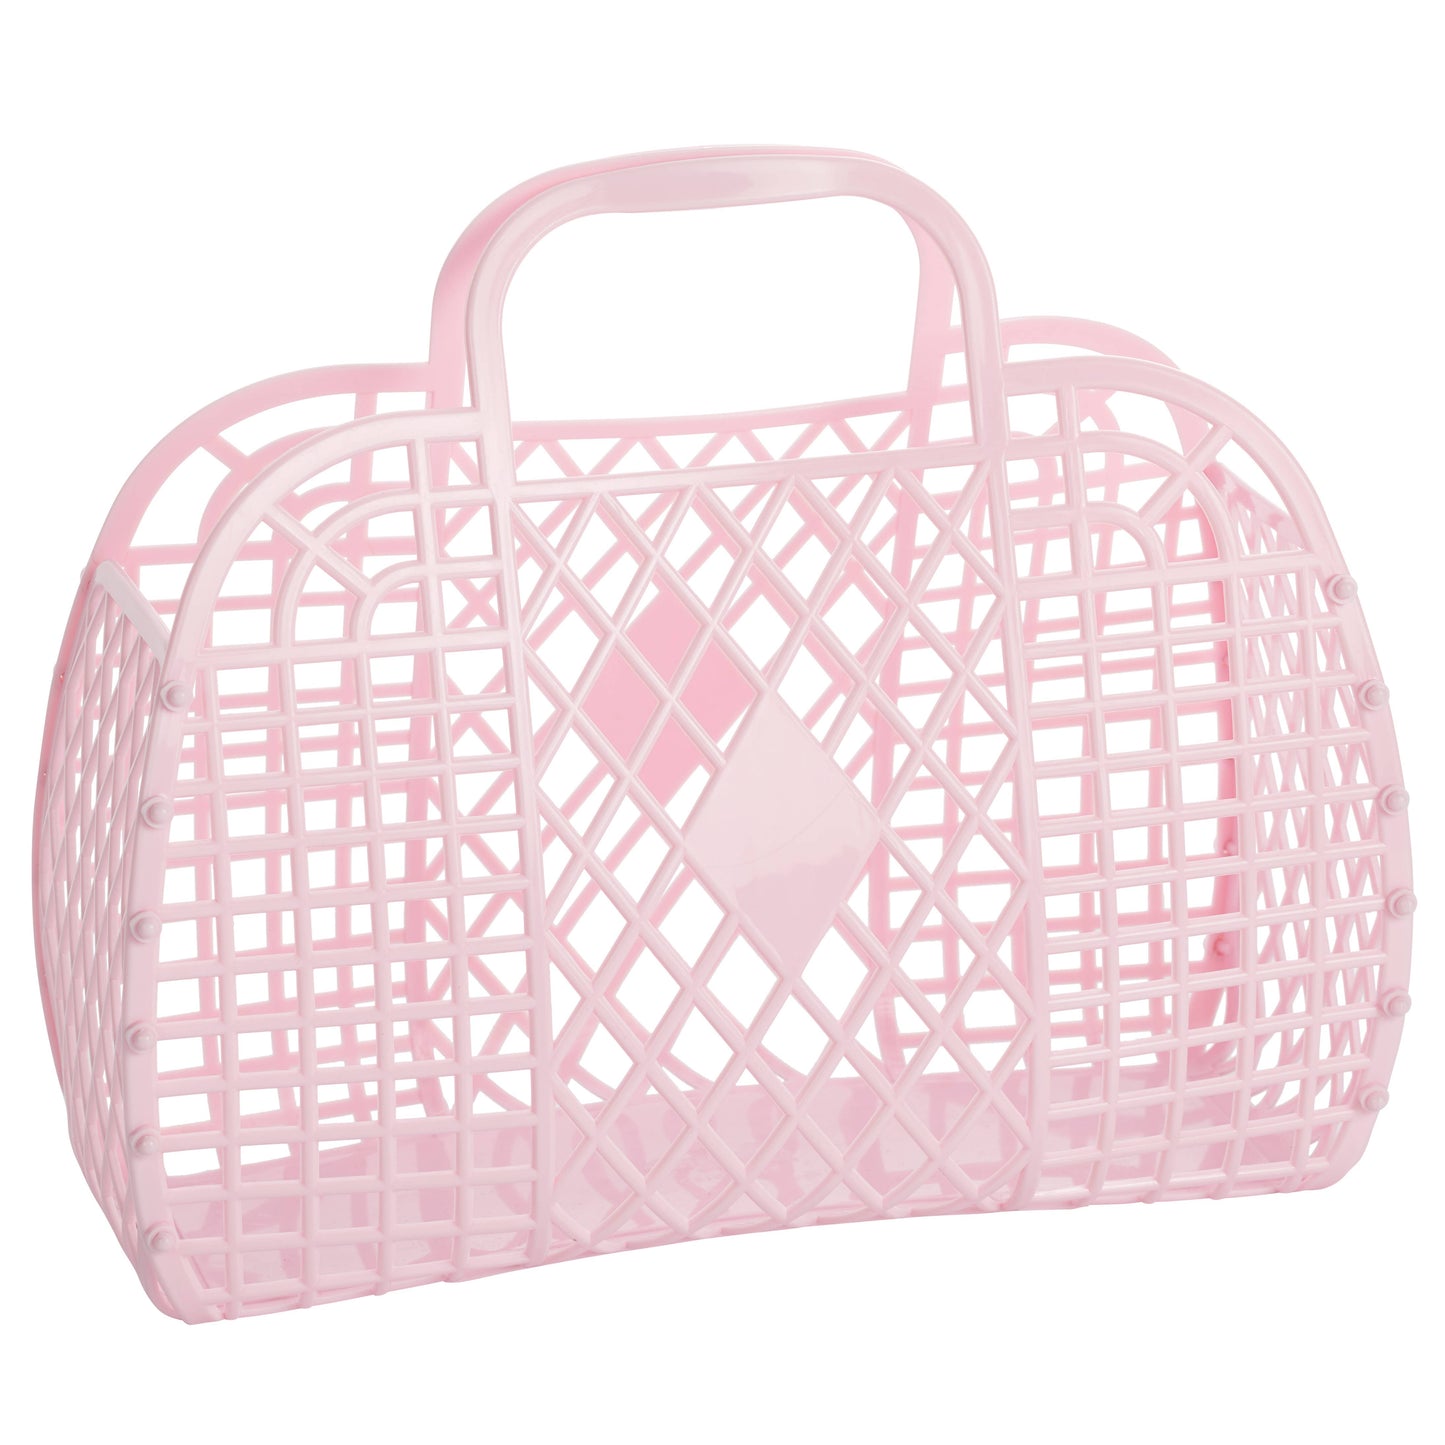 Retro Basket Jelly Bag - Large Pink